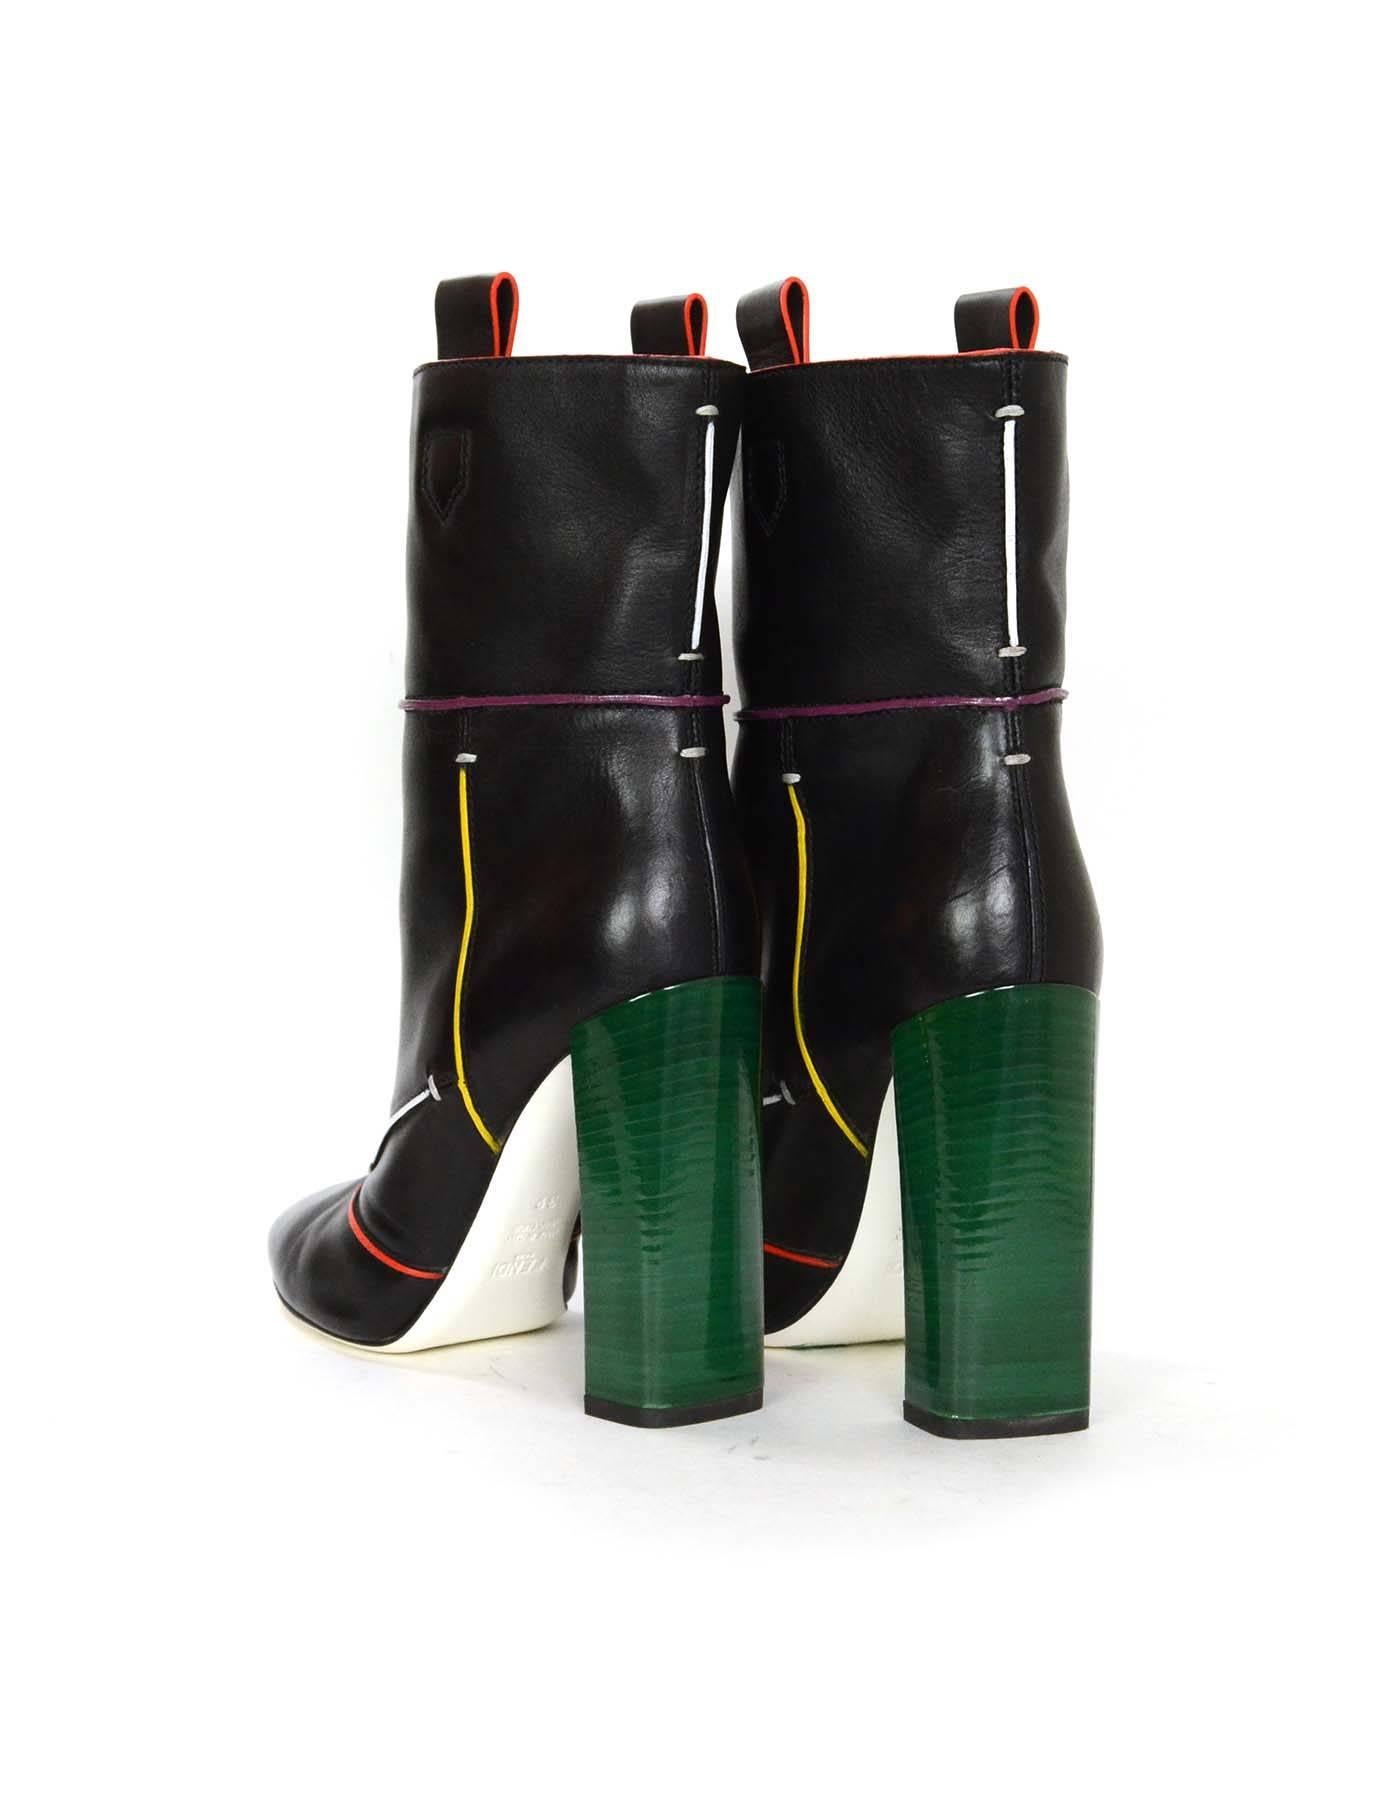 Fendi Black Leather Subway Boots sz 39 1